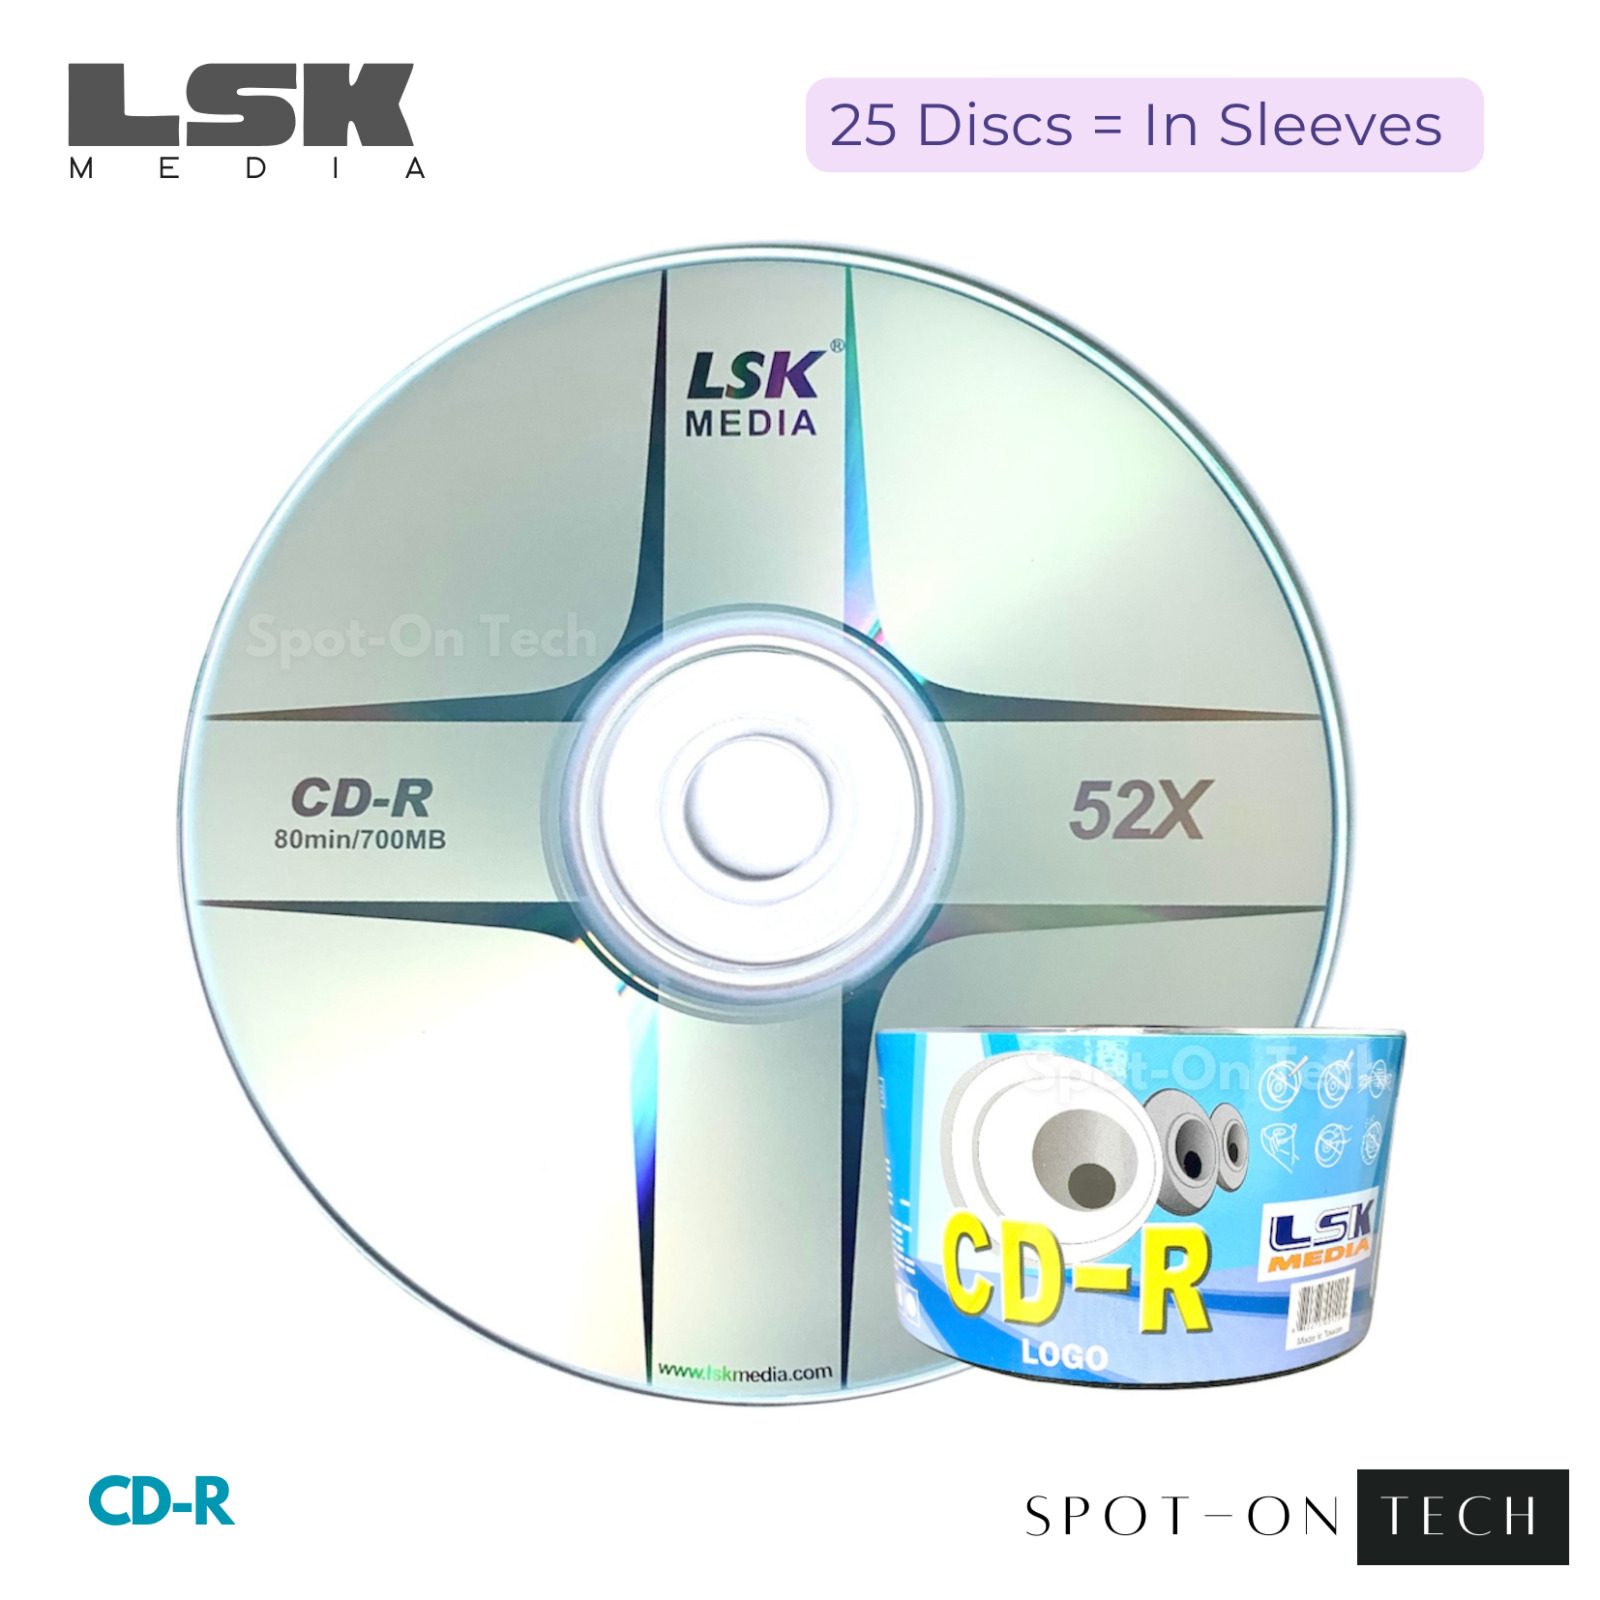 25 LSK CD CD-R Silver LOGO Top hp - Duplication Grade 80Min/700MB/52x SAME DAY